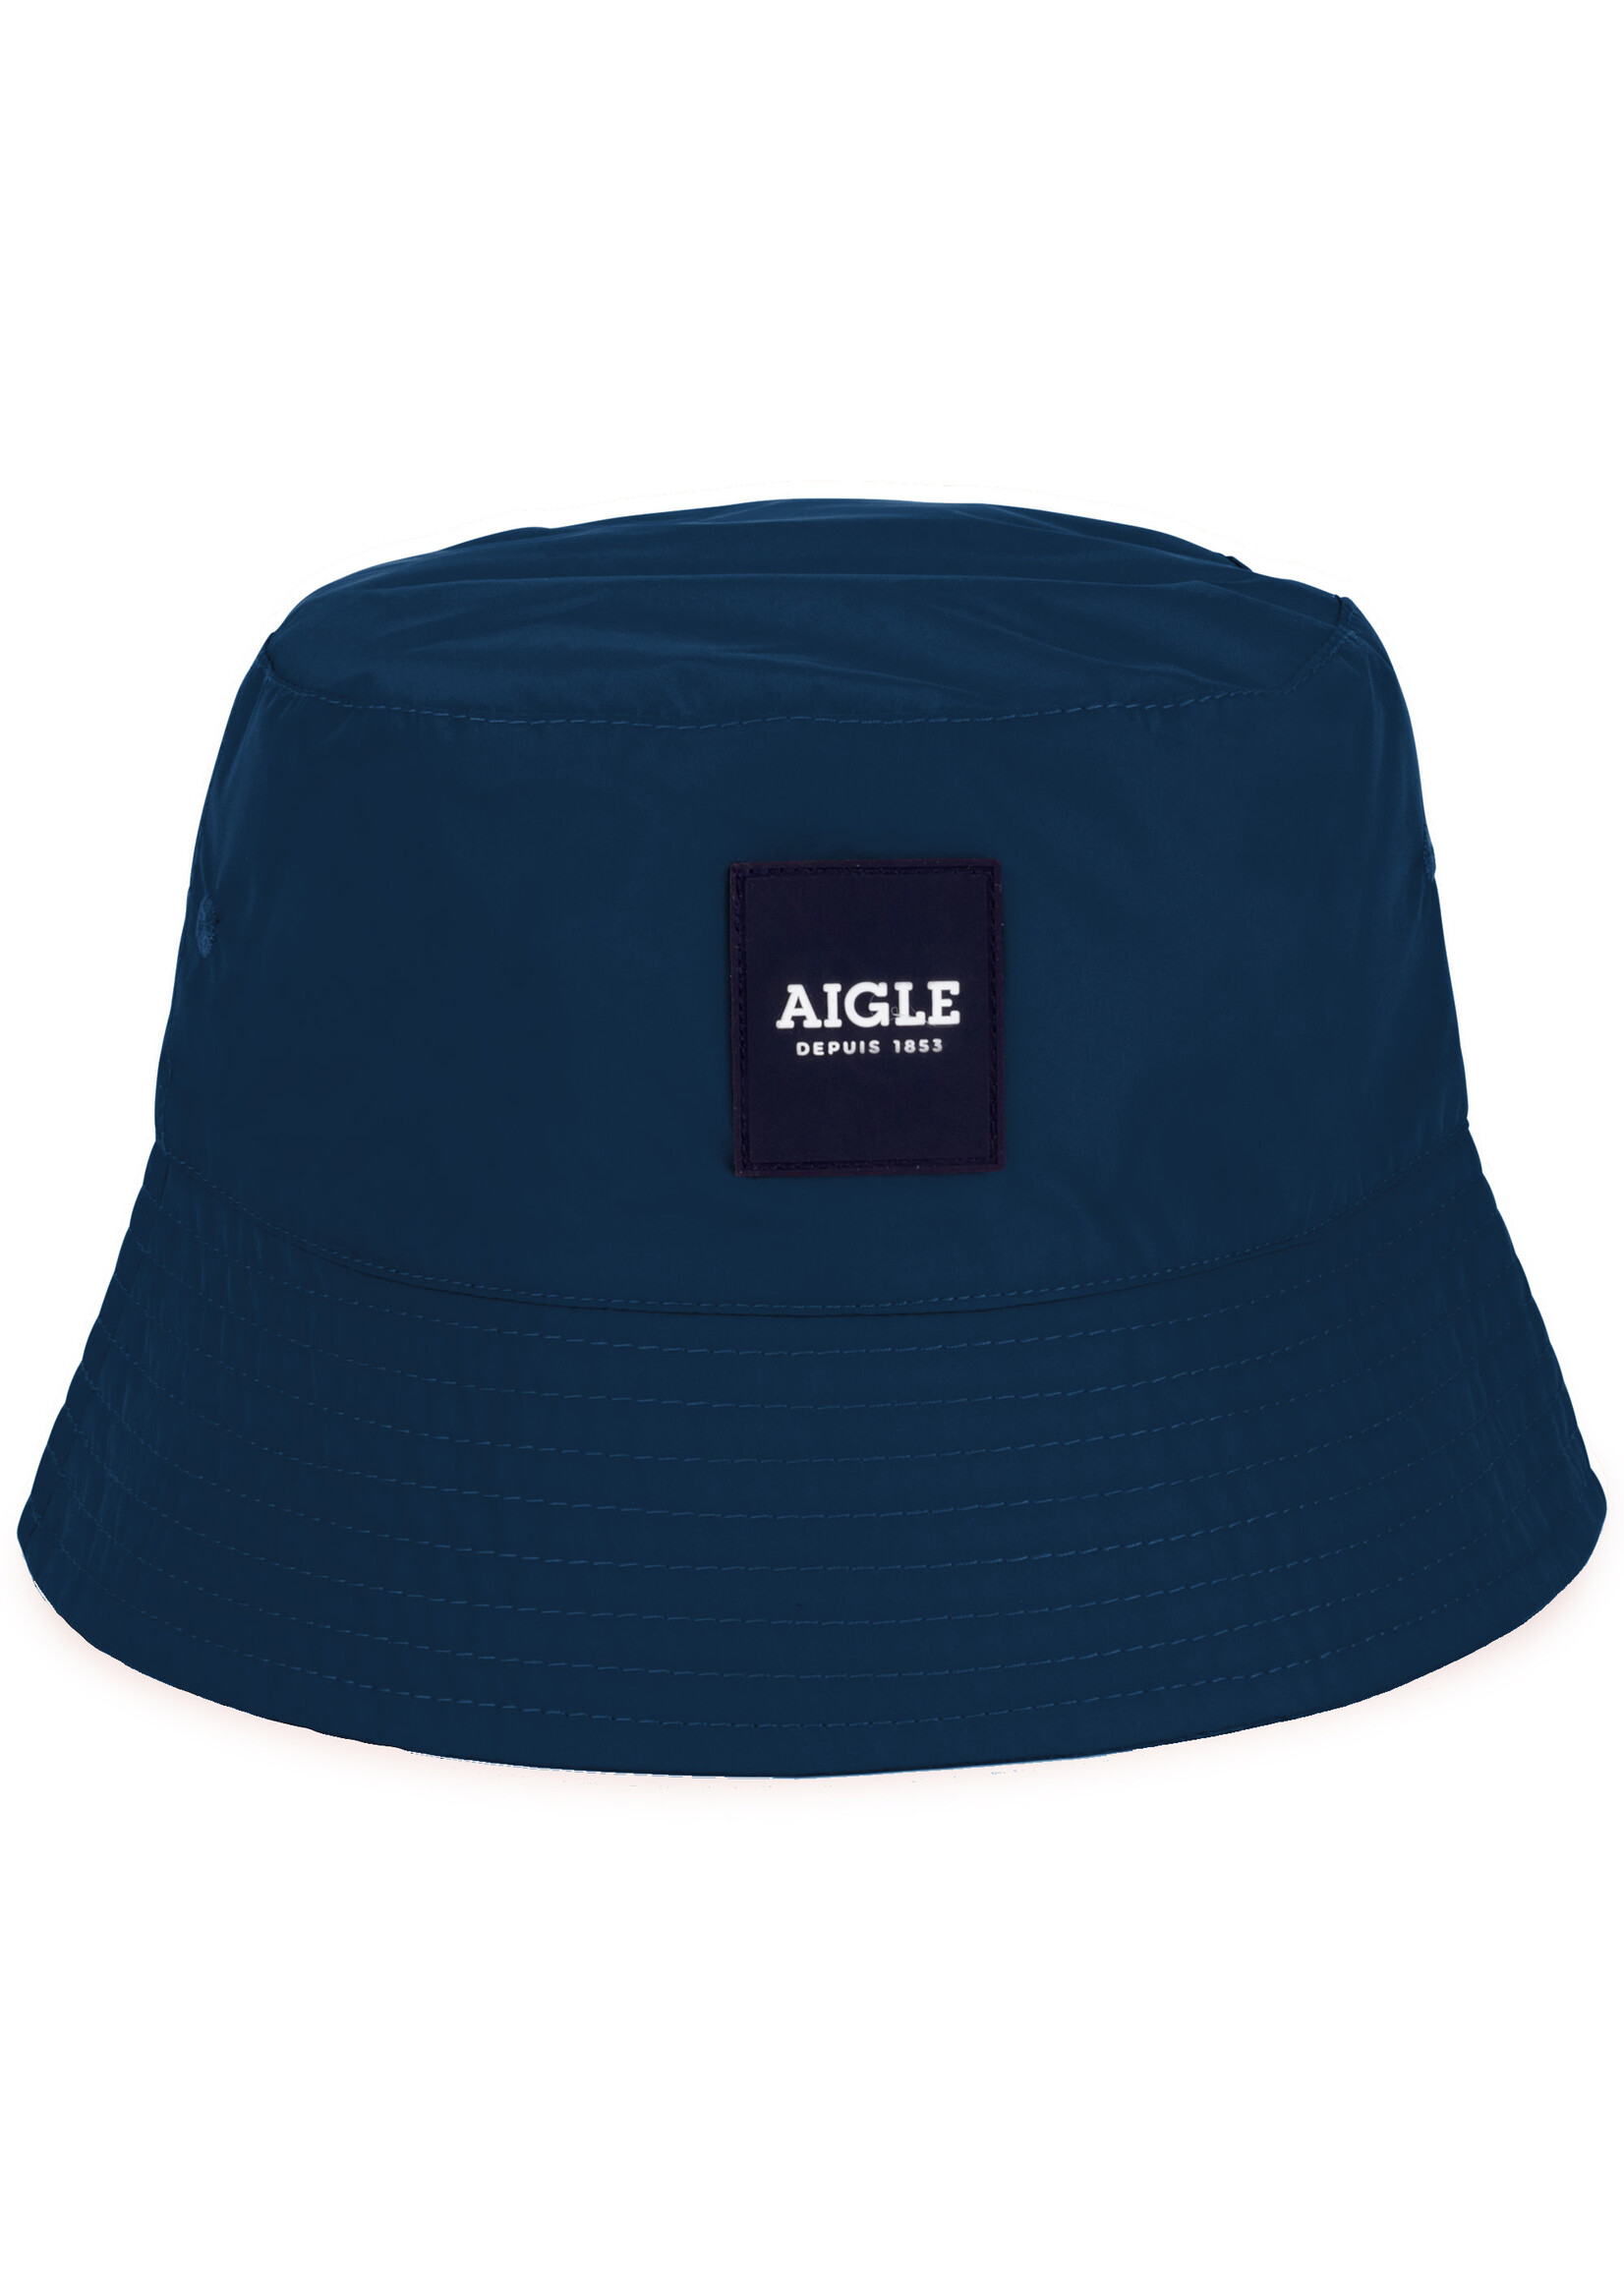 Aigle Aigle bucket rain hat navyblue - M51004